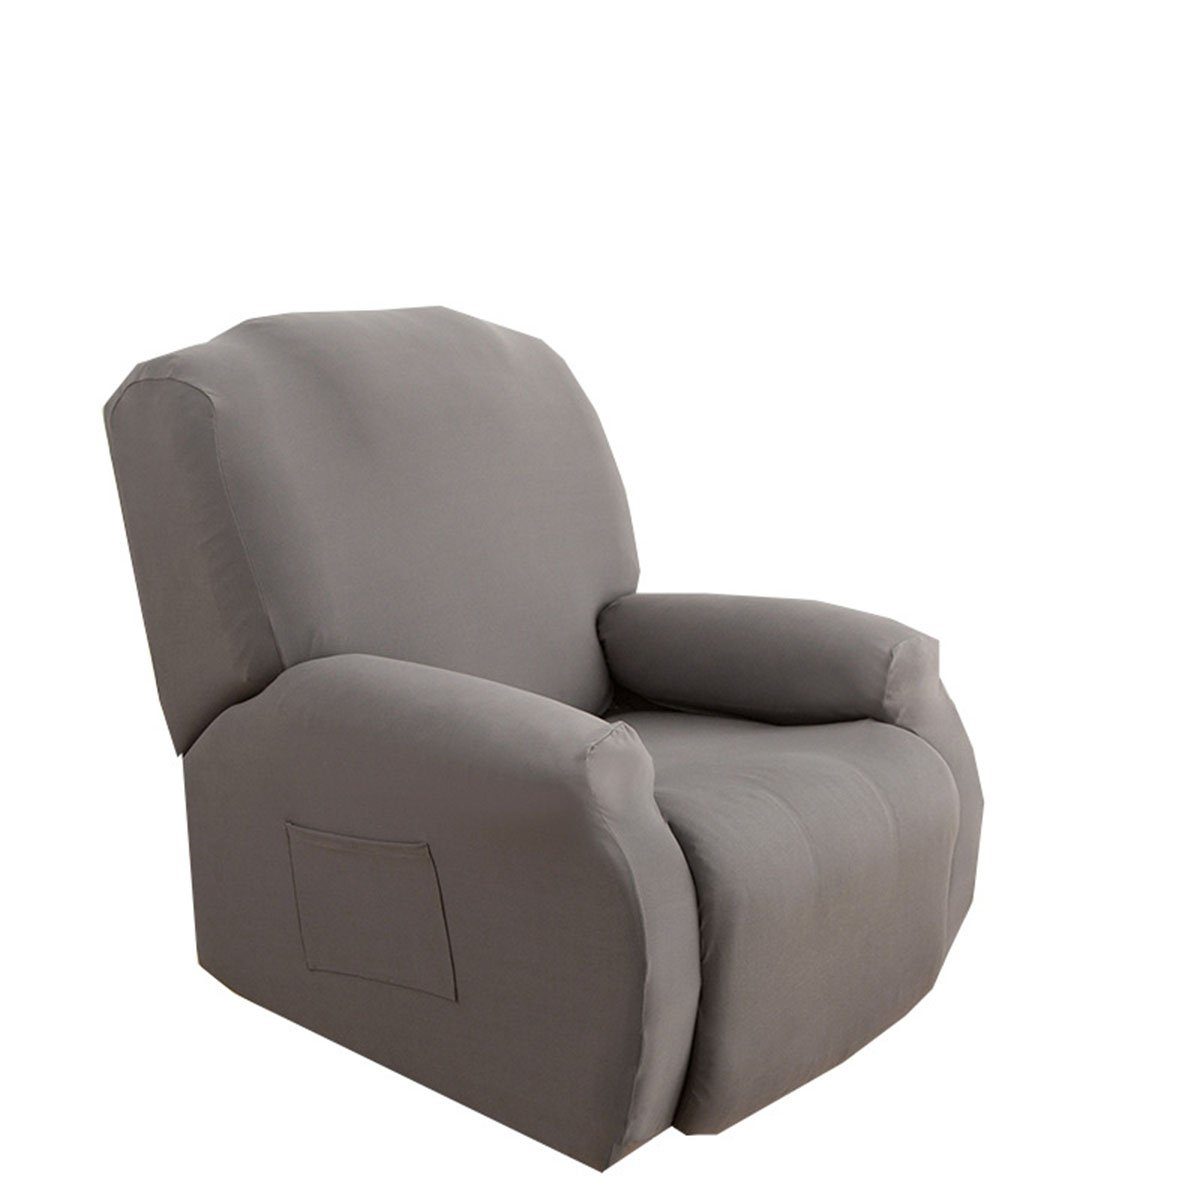 CTGtree Milchseide Sofahusse Stretch Relaxsessel Sesselbezug, Stretchhusse für Grau